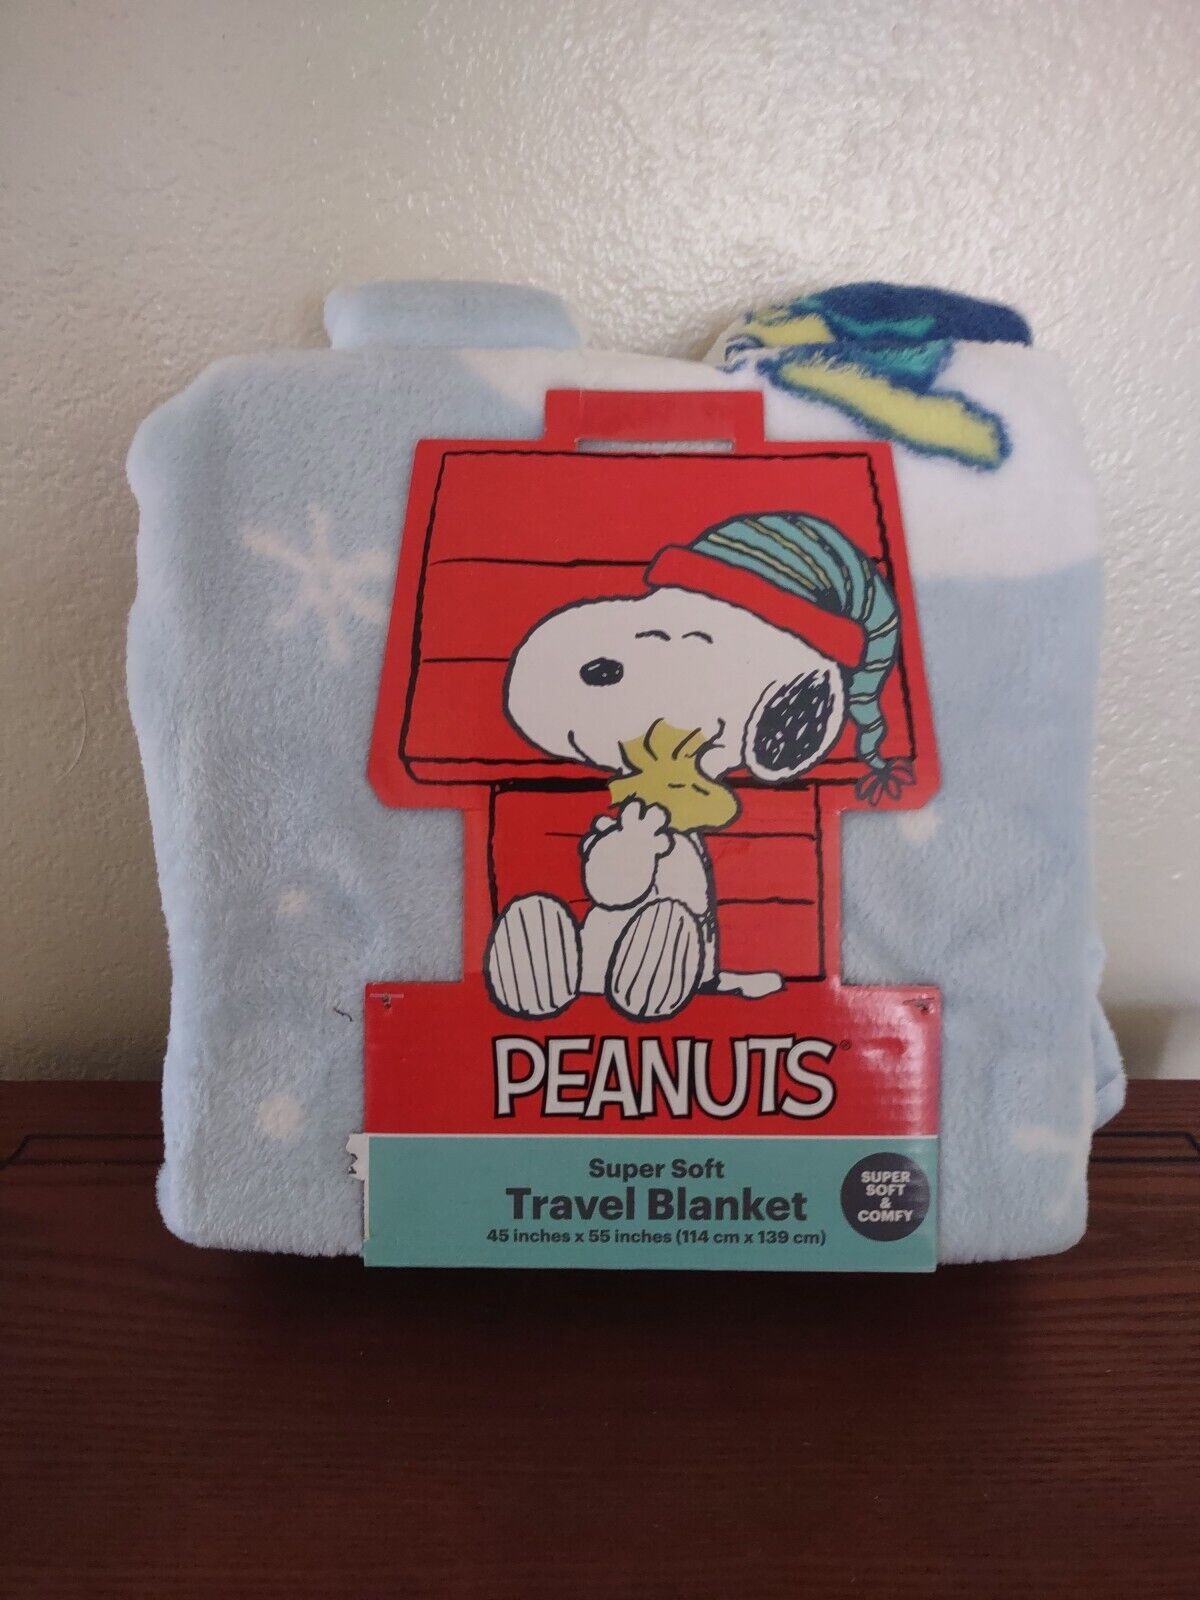 PEANUTS Snoopy & Friends Snowman 45 X 55 Inch Travel Blanket NWT